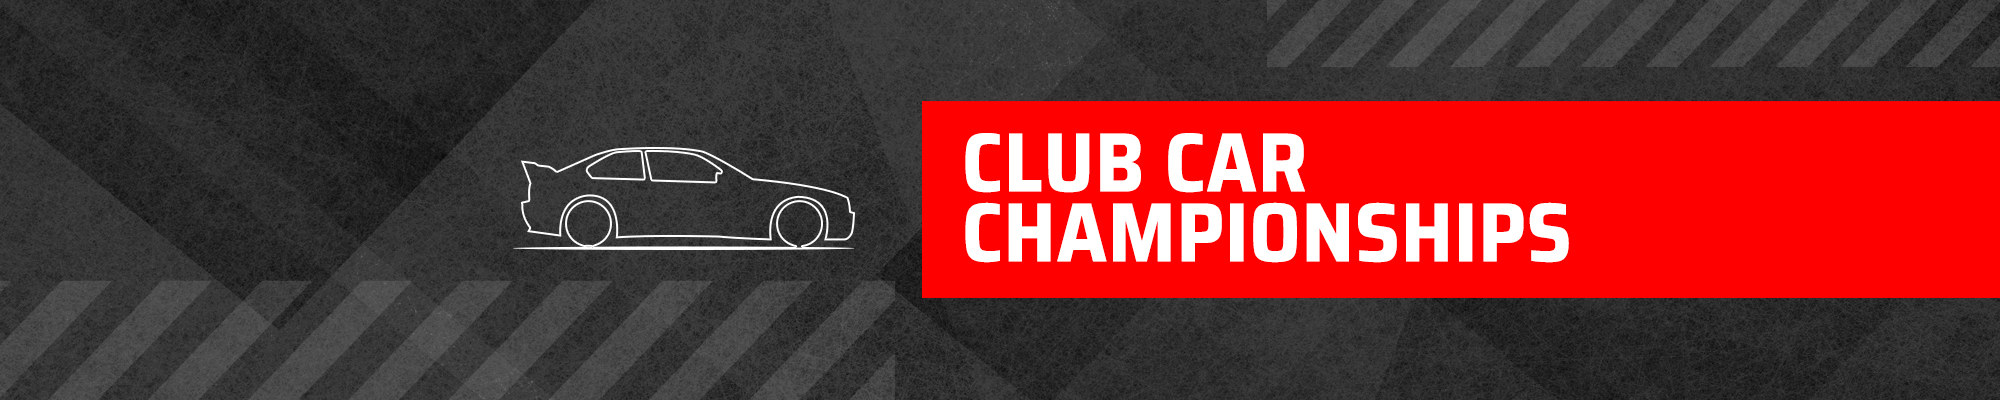 GT Cup & MSVR Club Car Championships